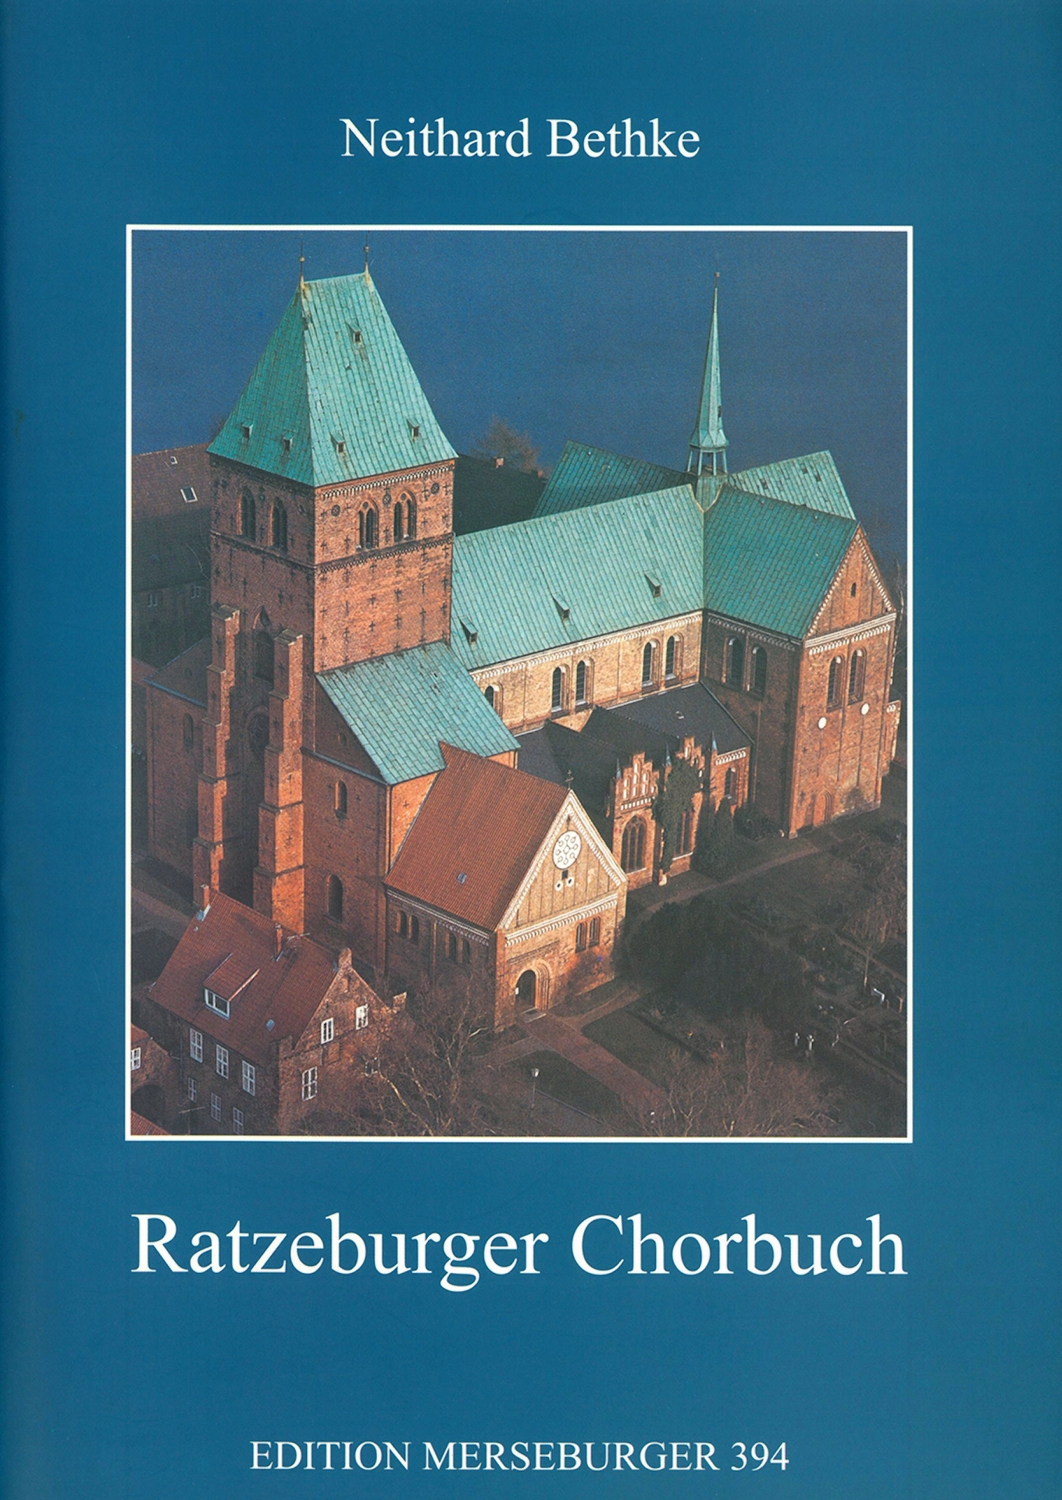 neithard-bethke-ratzeburger-chorbuch-gch-_0001.JPG